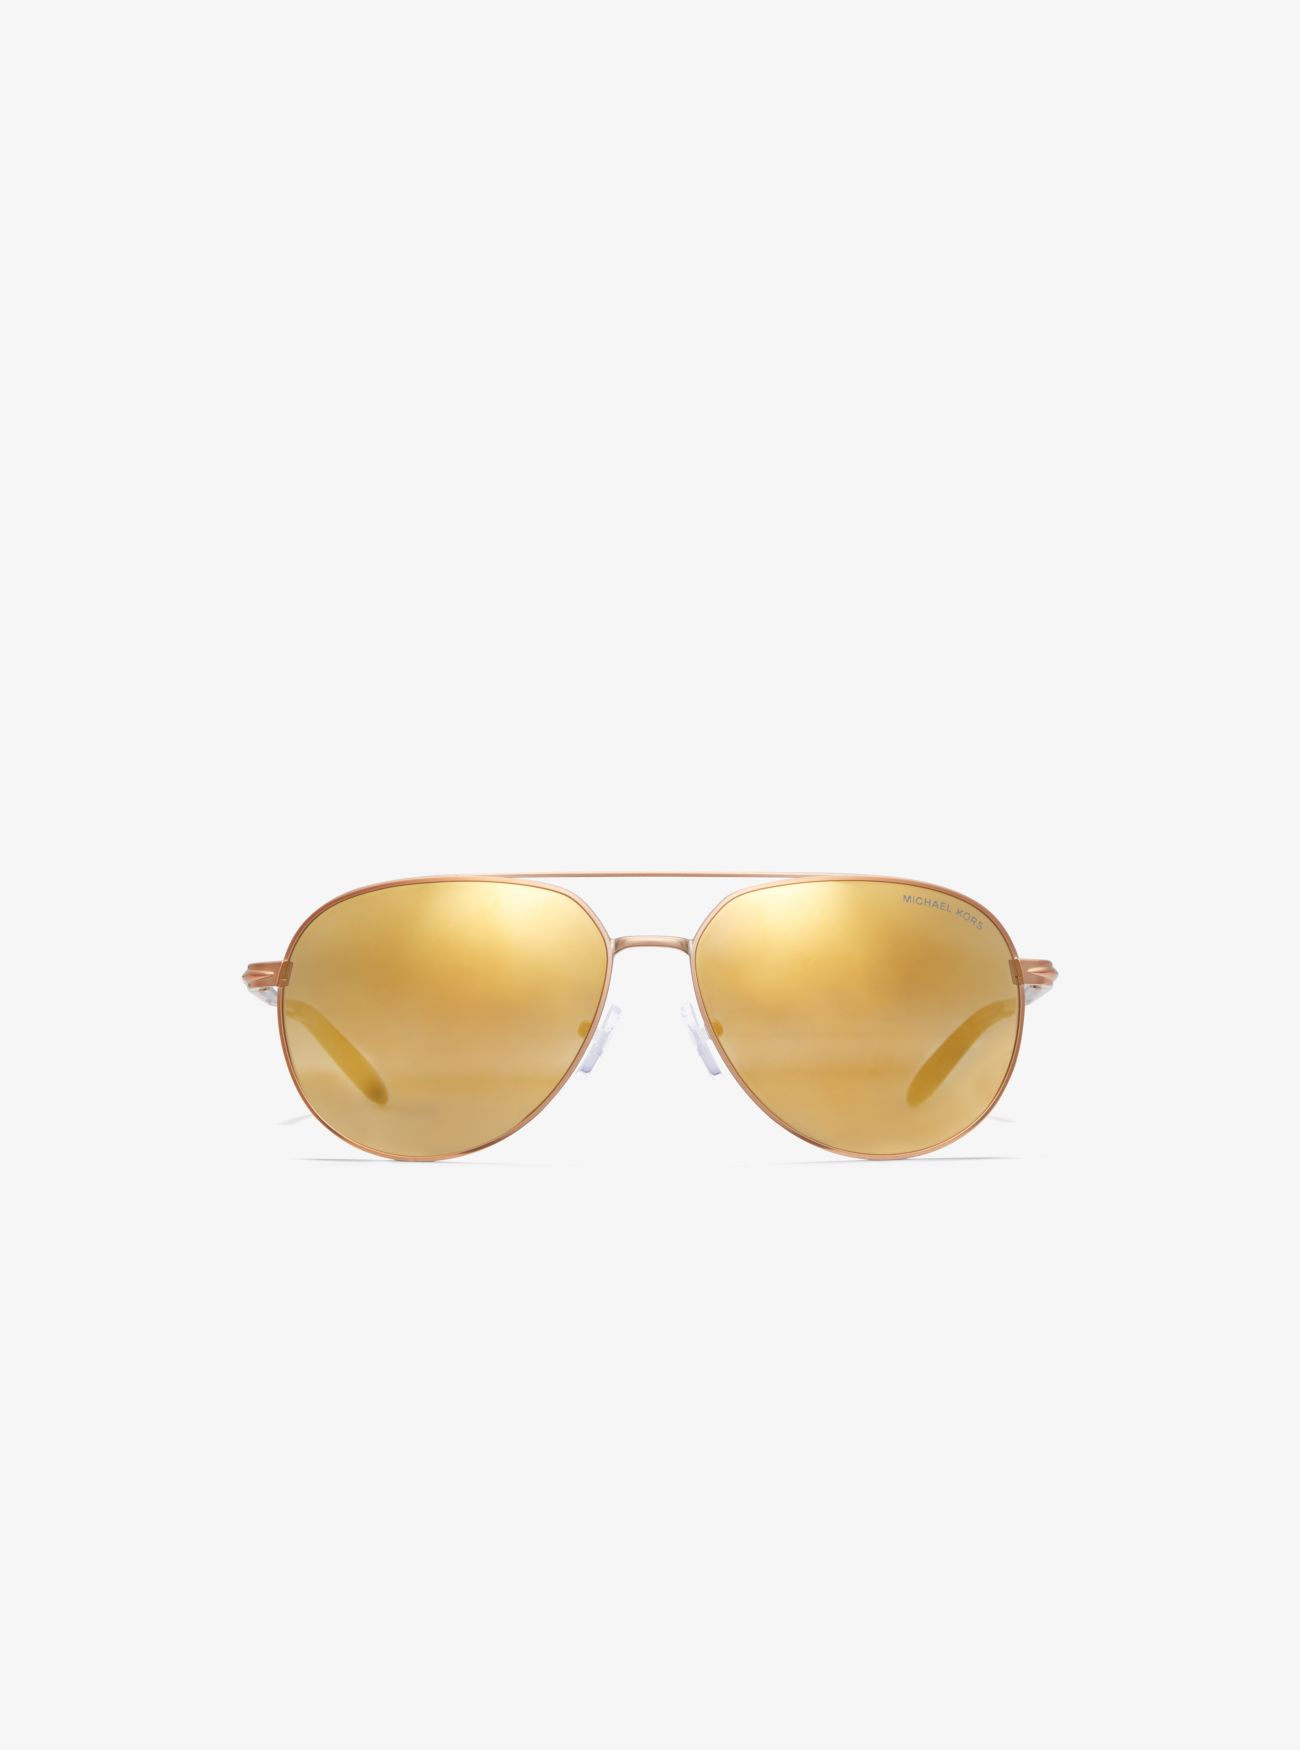 MK Highlands Sunglasses - Sand - Michael Kors